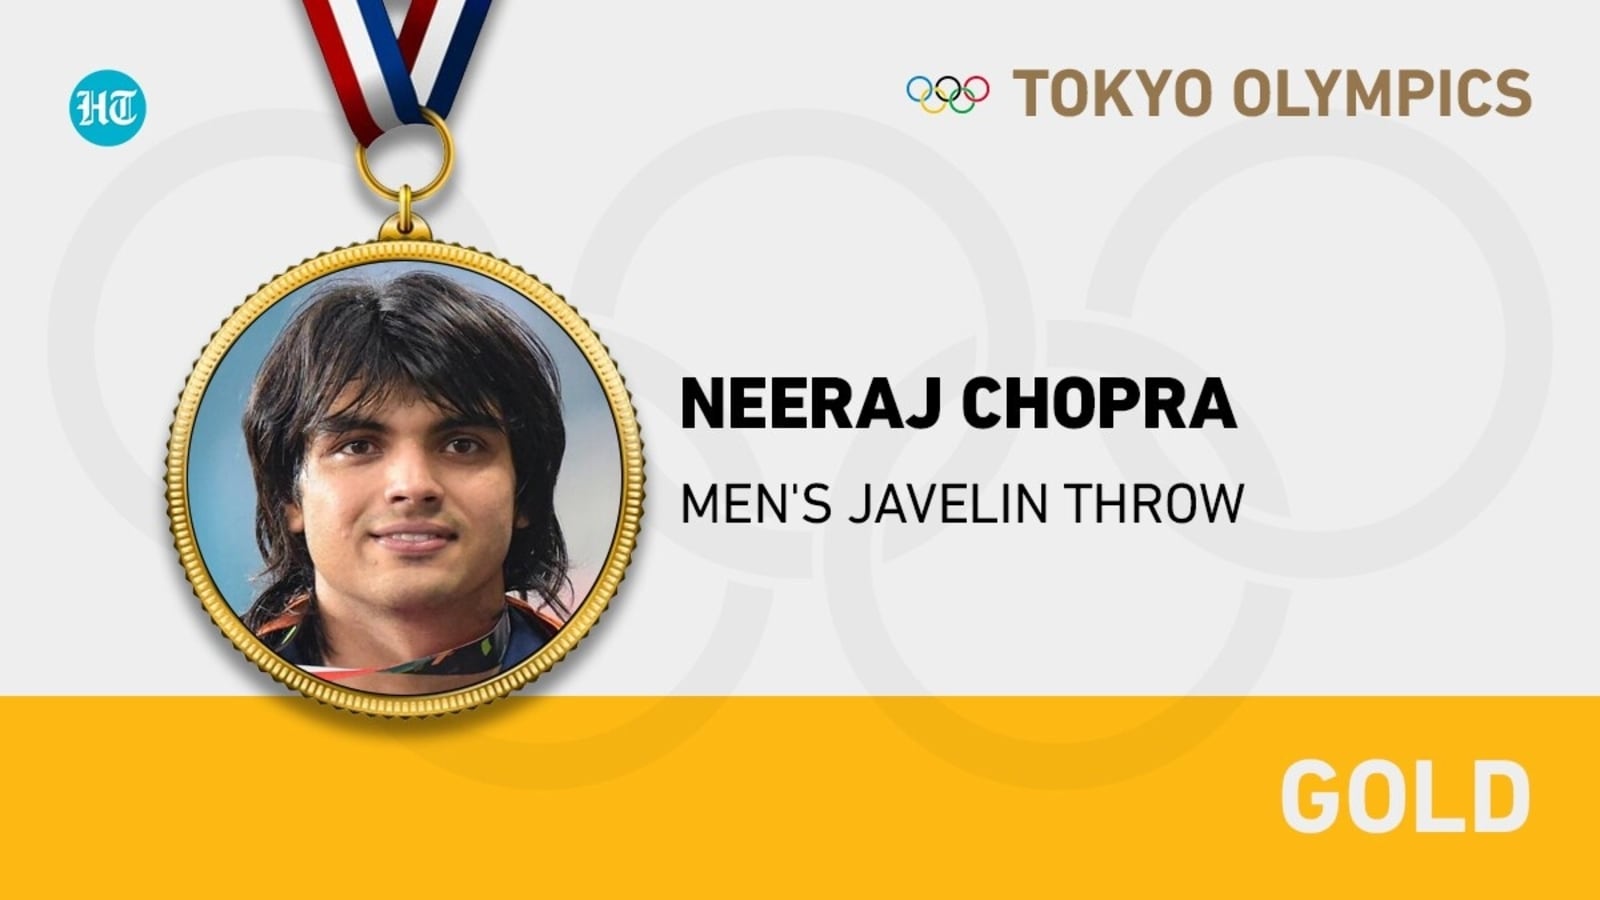 Tokyo Olympics: India's Neeraj Chopra wins historic gold medal in men's javelin throw event